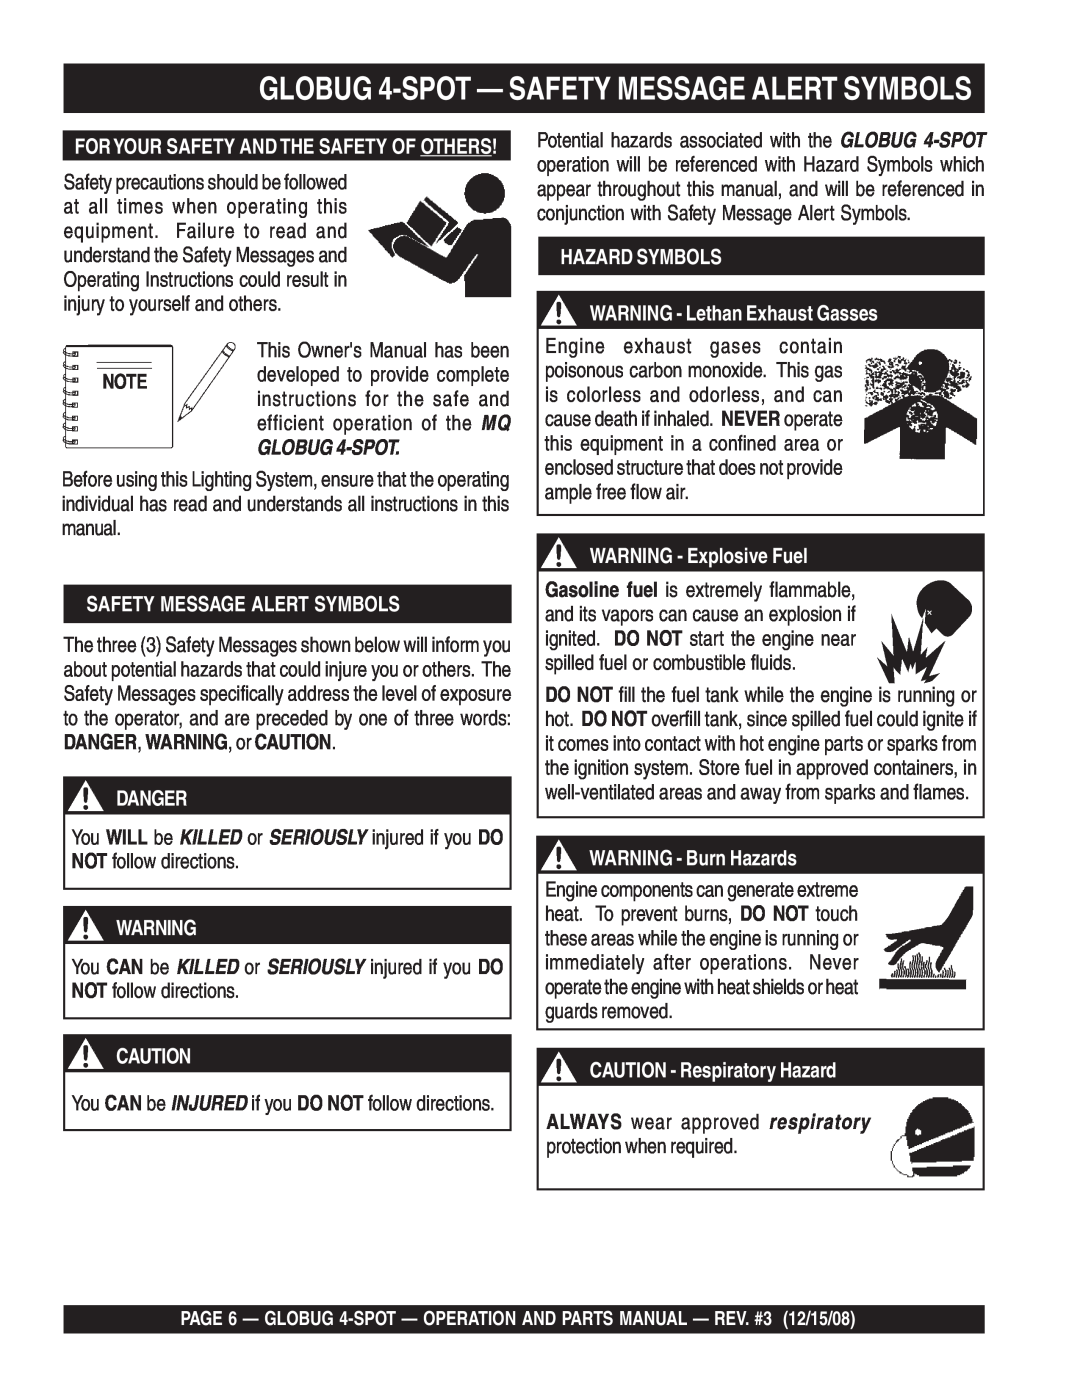 Multiquip gb43sc manual GLOBUG 4-SPOT - SAFETY MESSAGE ALERT SYMBOLS, Safety Message Alert Symbols, Danger 